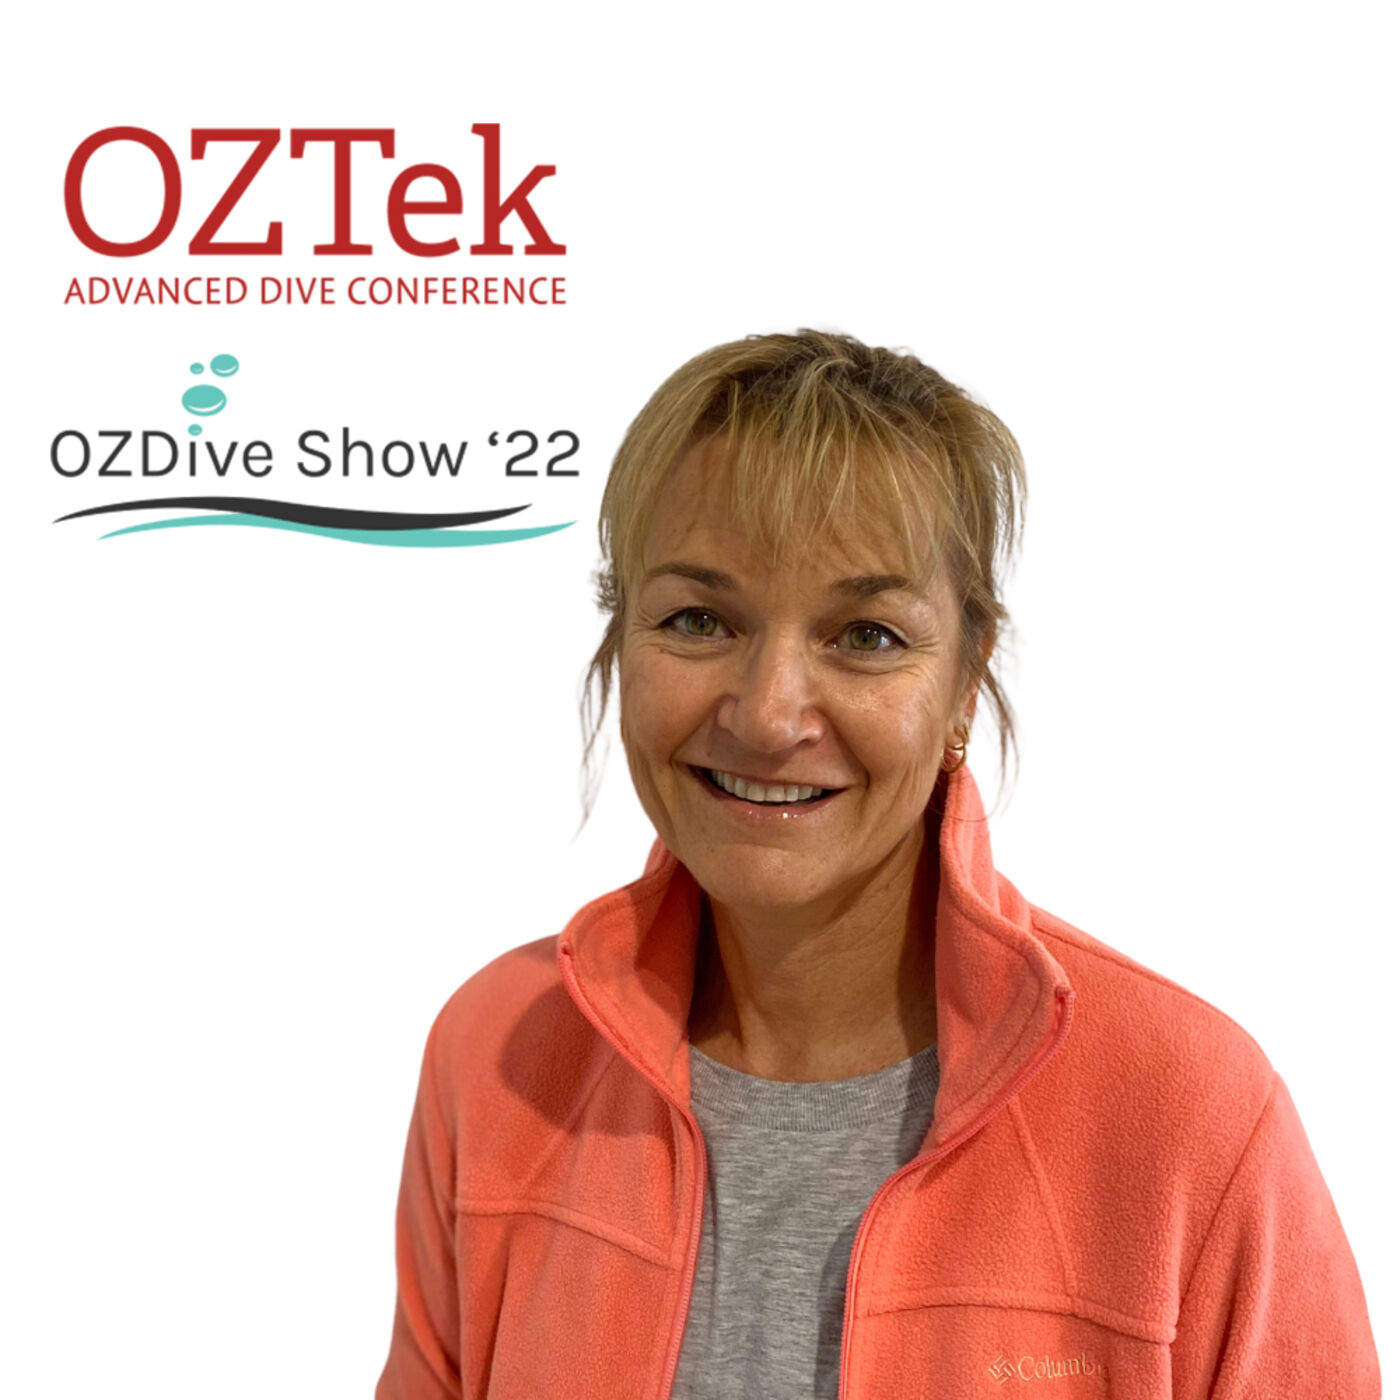 Sue Crowe - OzTek Dive Conference & OzDive Expo '22 - S03 E09